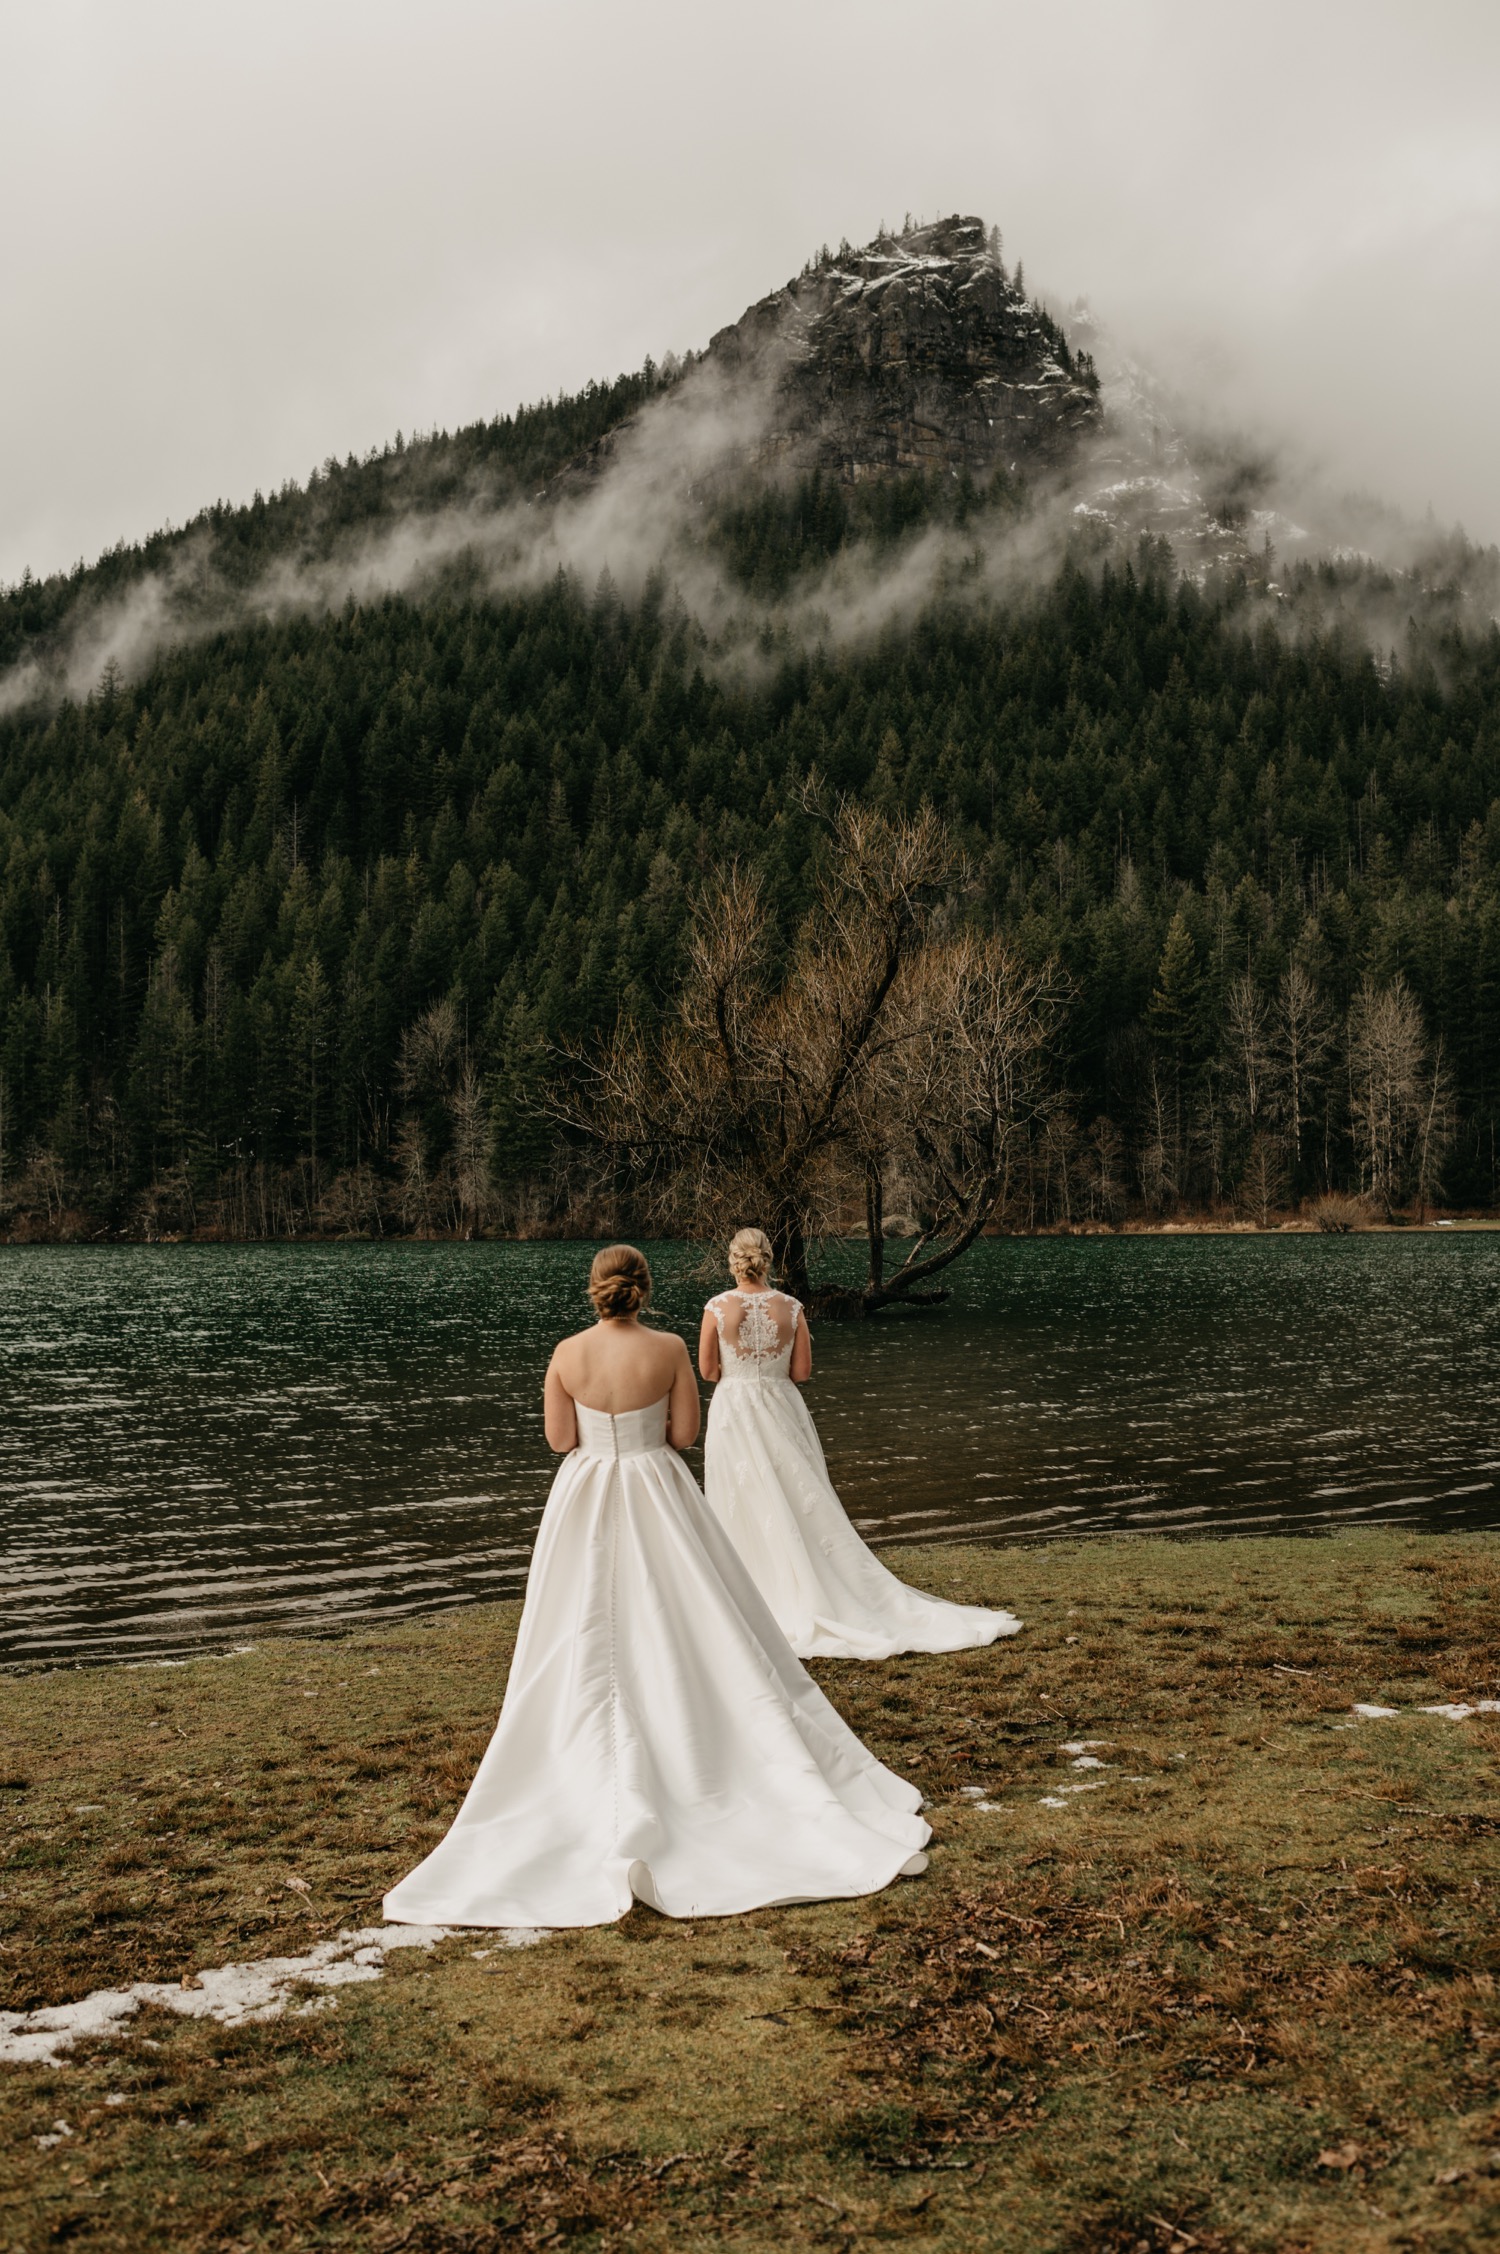 Crystal and Sarahs Intimate Seattle Wedding // LGBTQ photographer photo photo